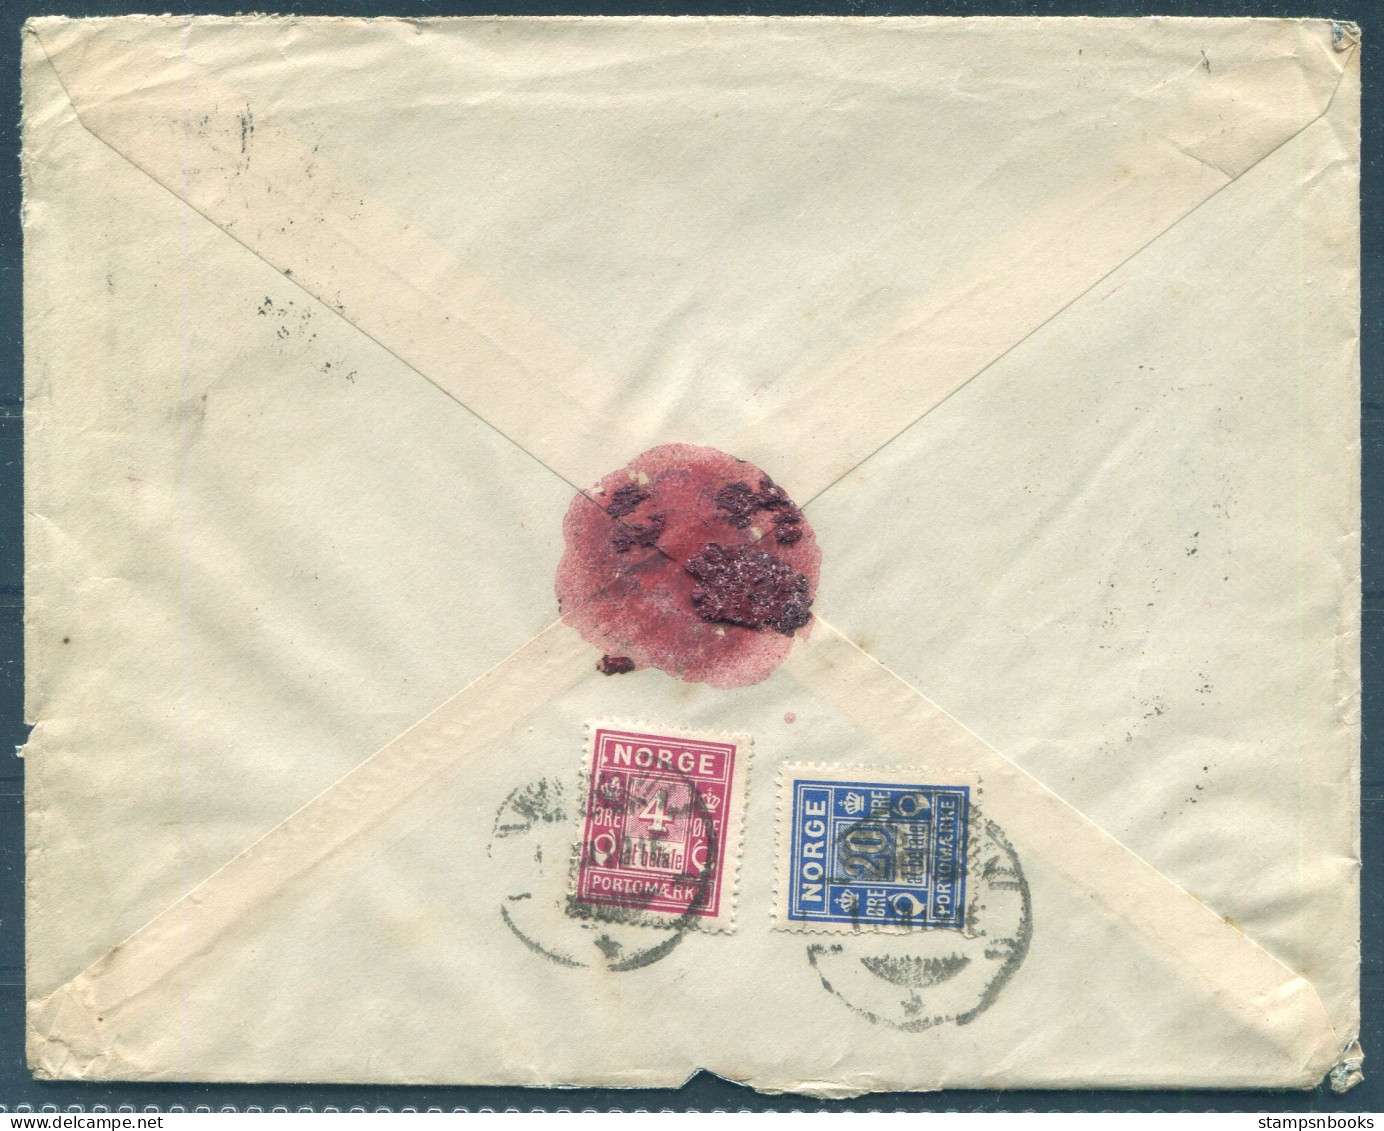 1919 Germany Breslau Postage Due, Taxe Postomaerke Cover - Kristiania Norway - Brieven En Documenten